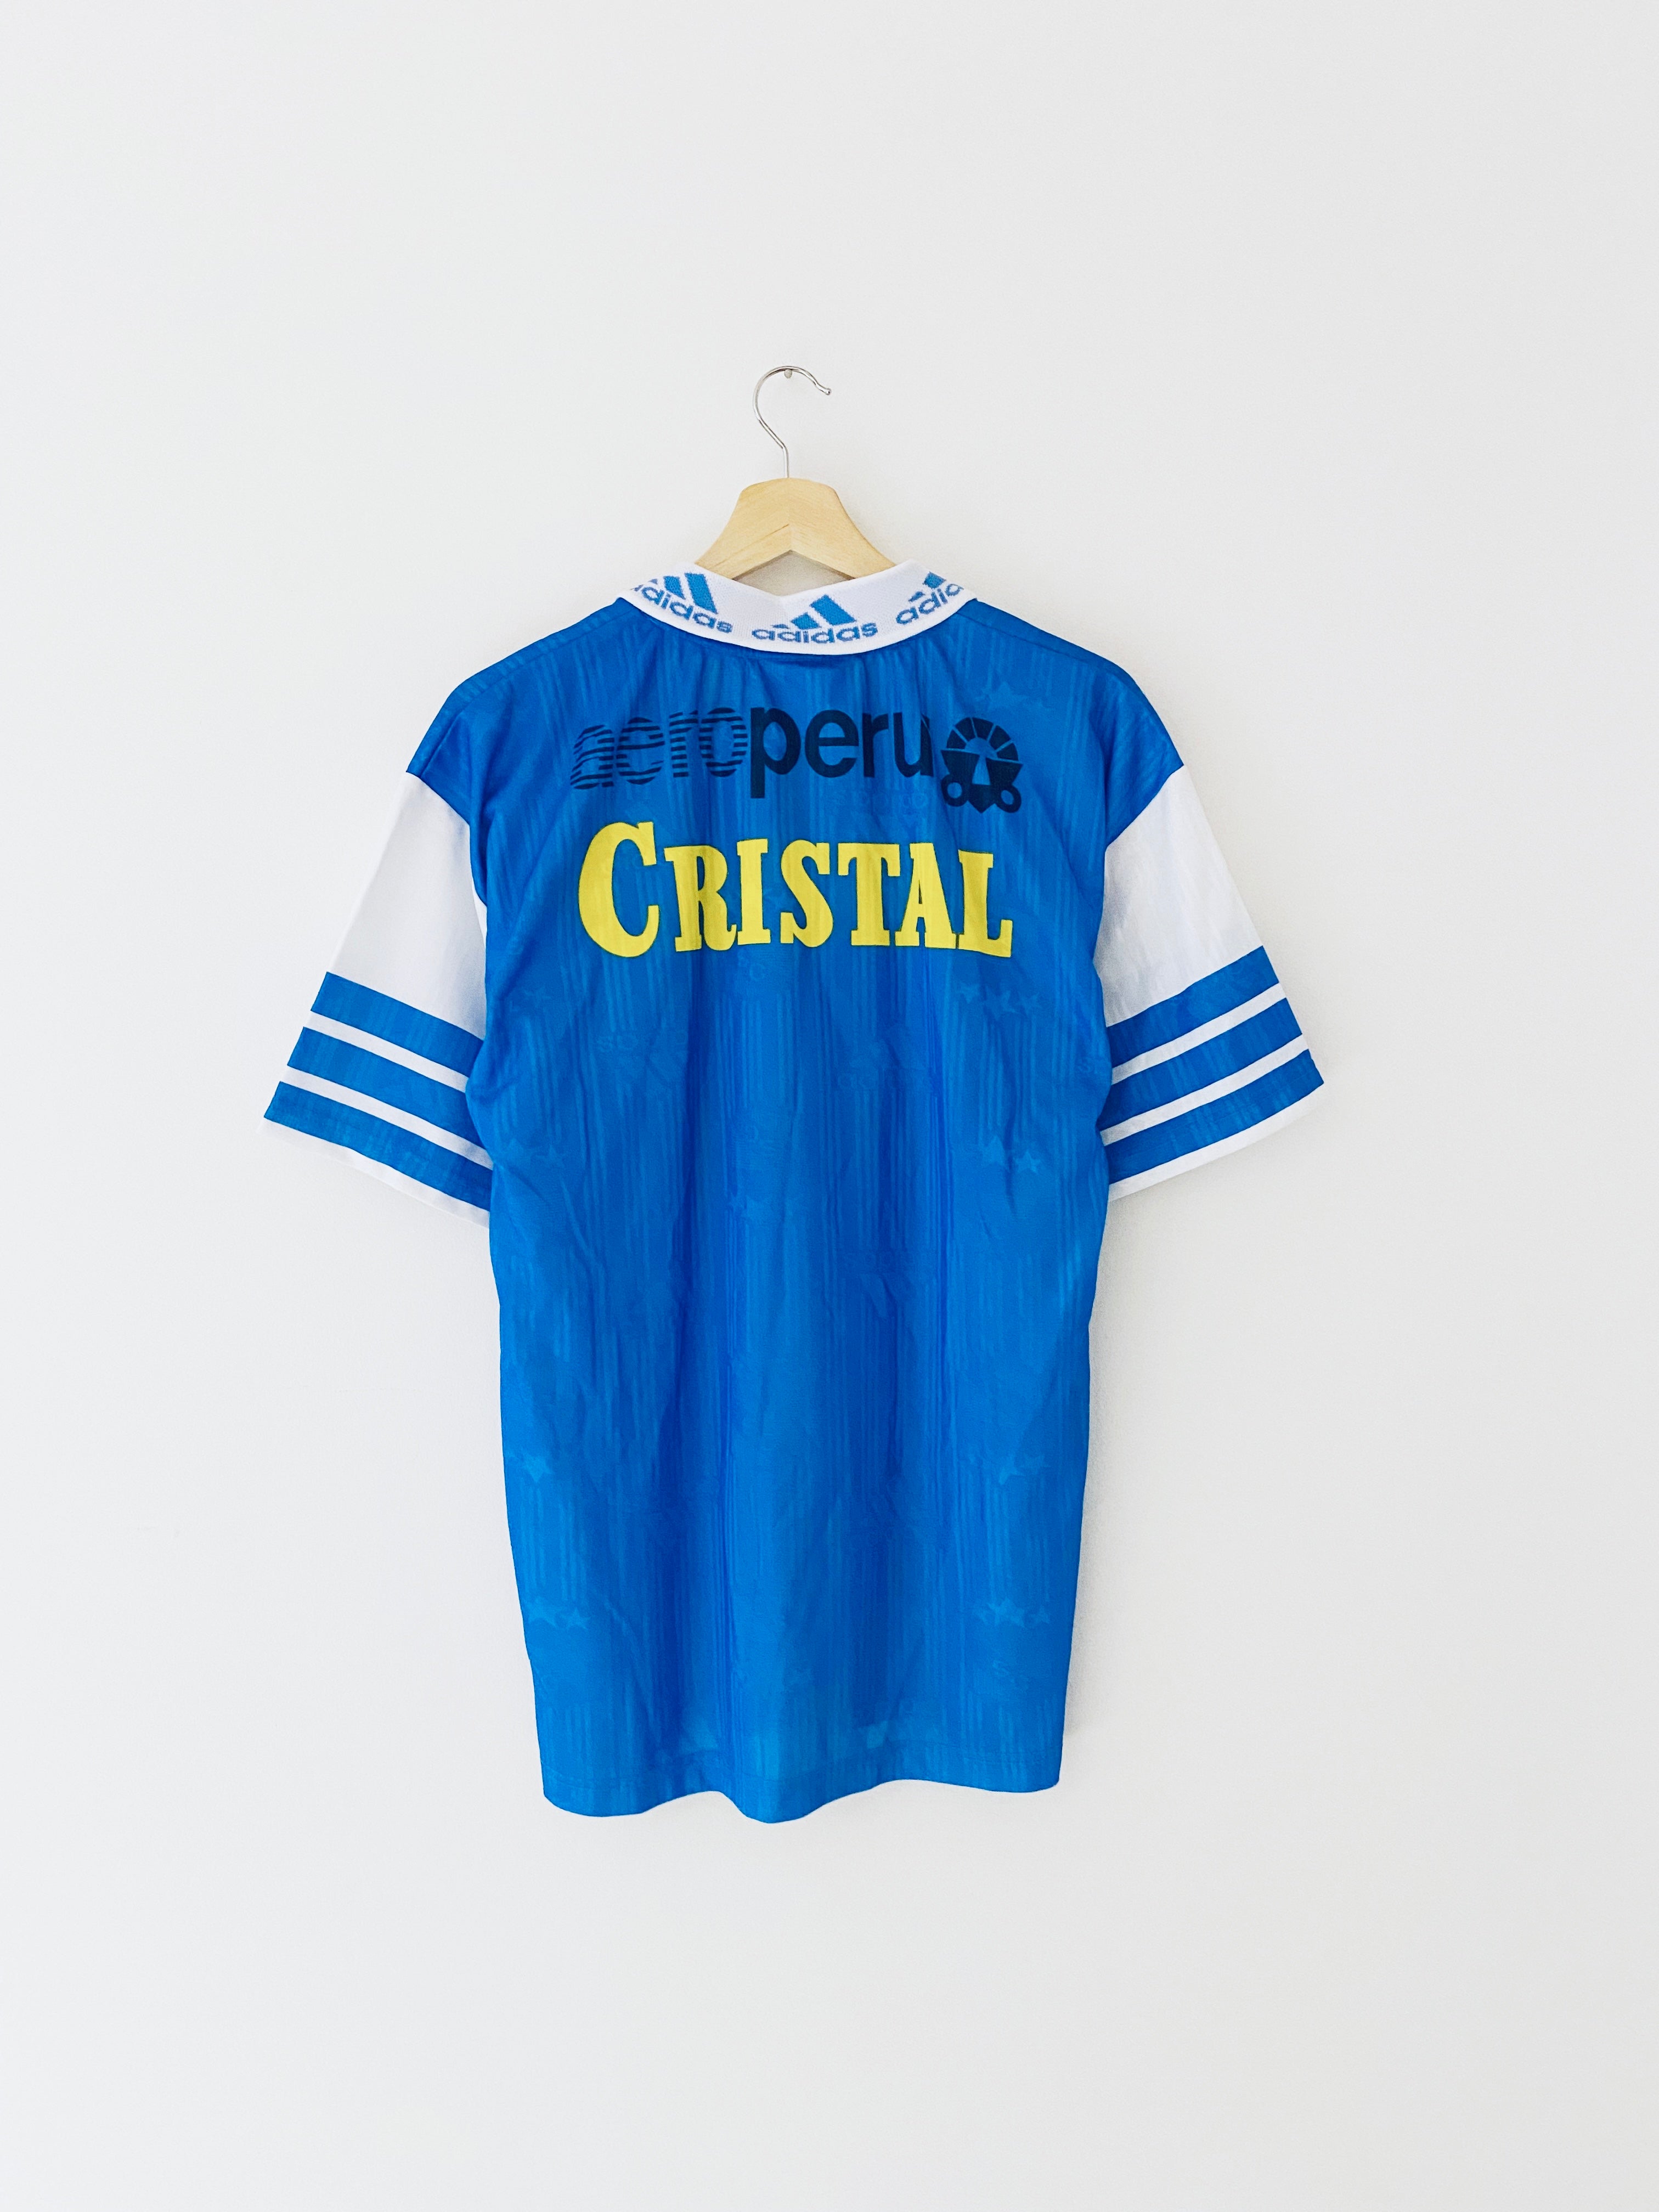 1998 Sporting Cristal Home Shirt (M) 9/10